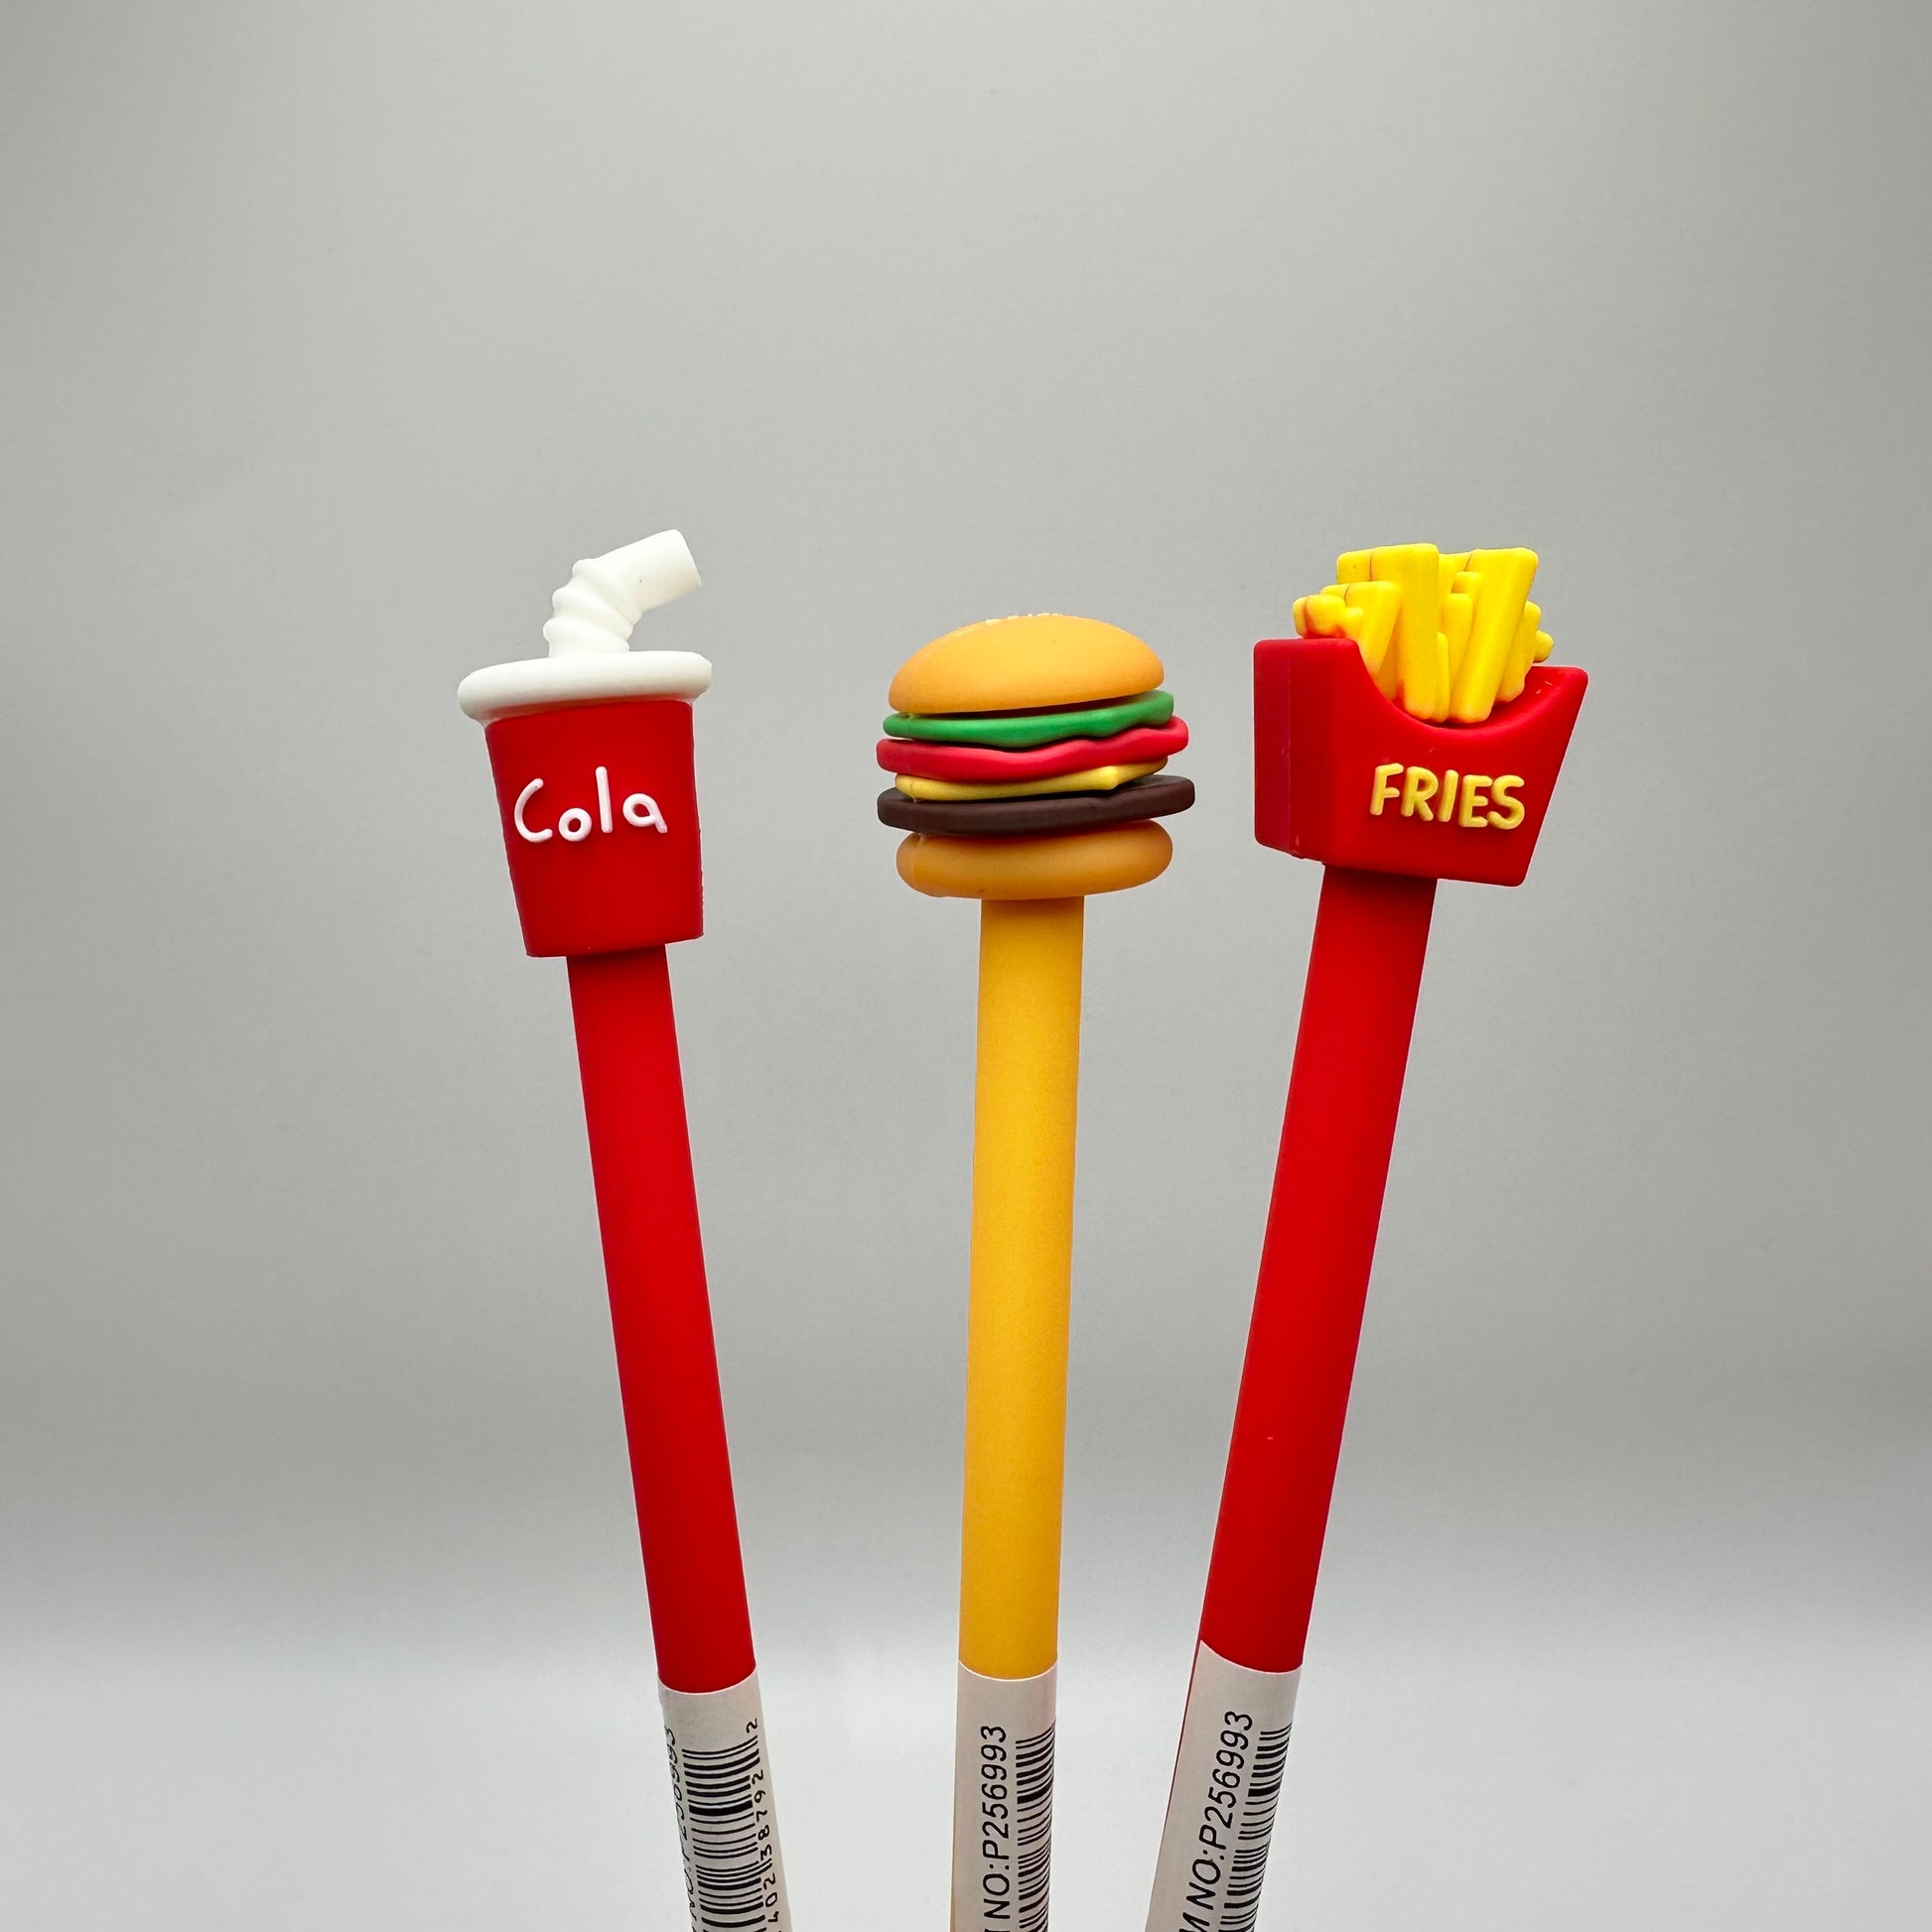 Three fast food pens: Cola, Cheeseburger, Fries.